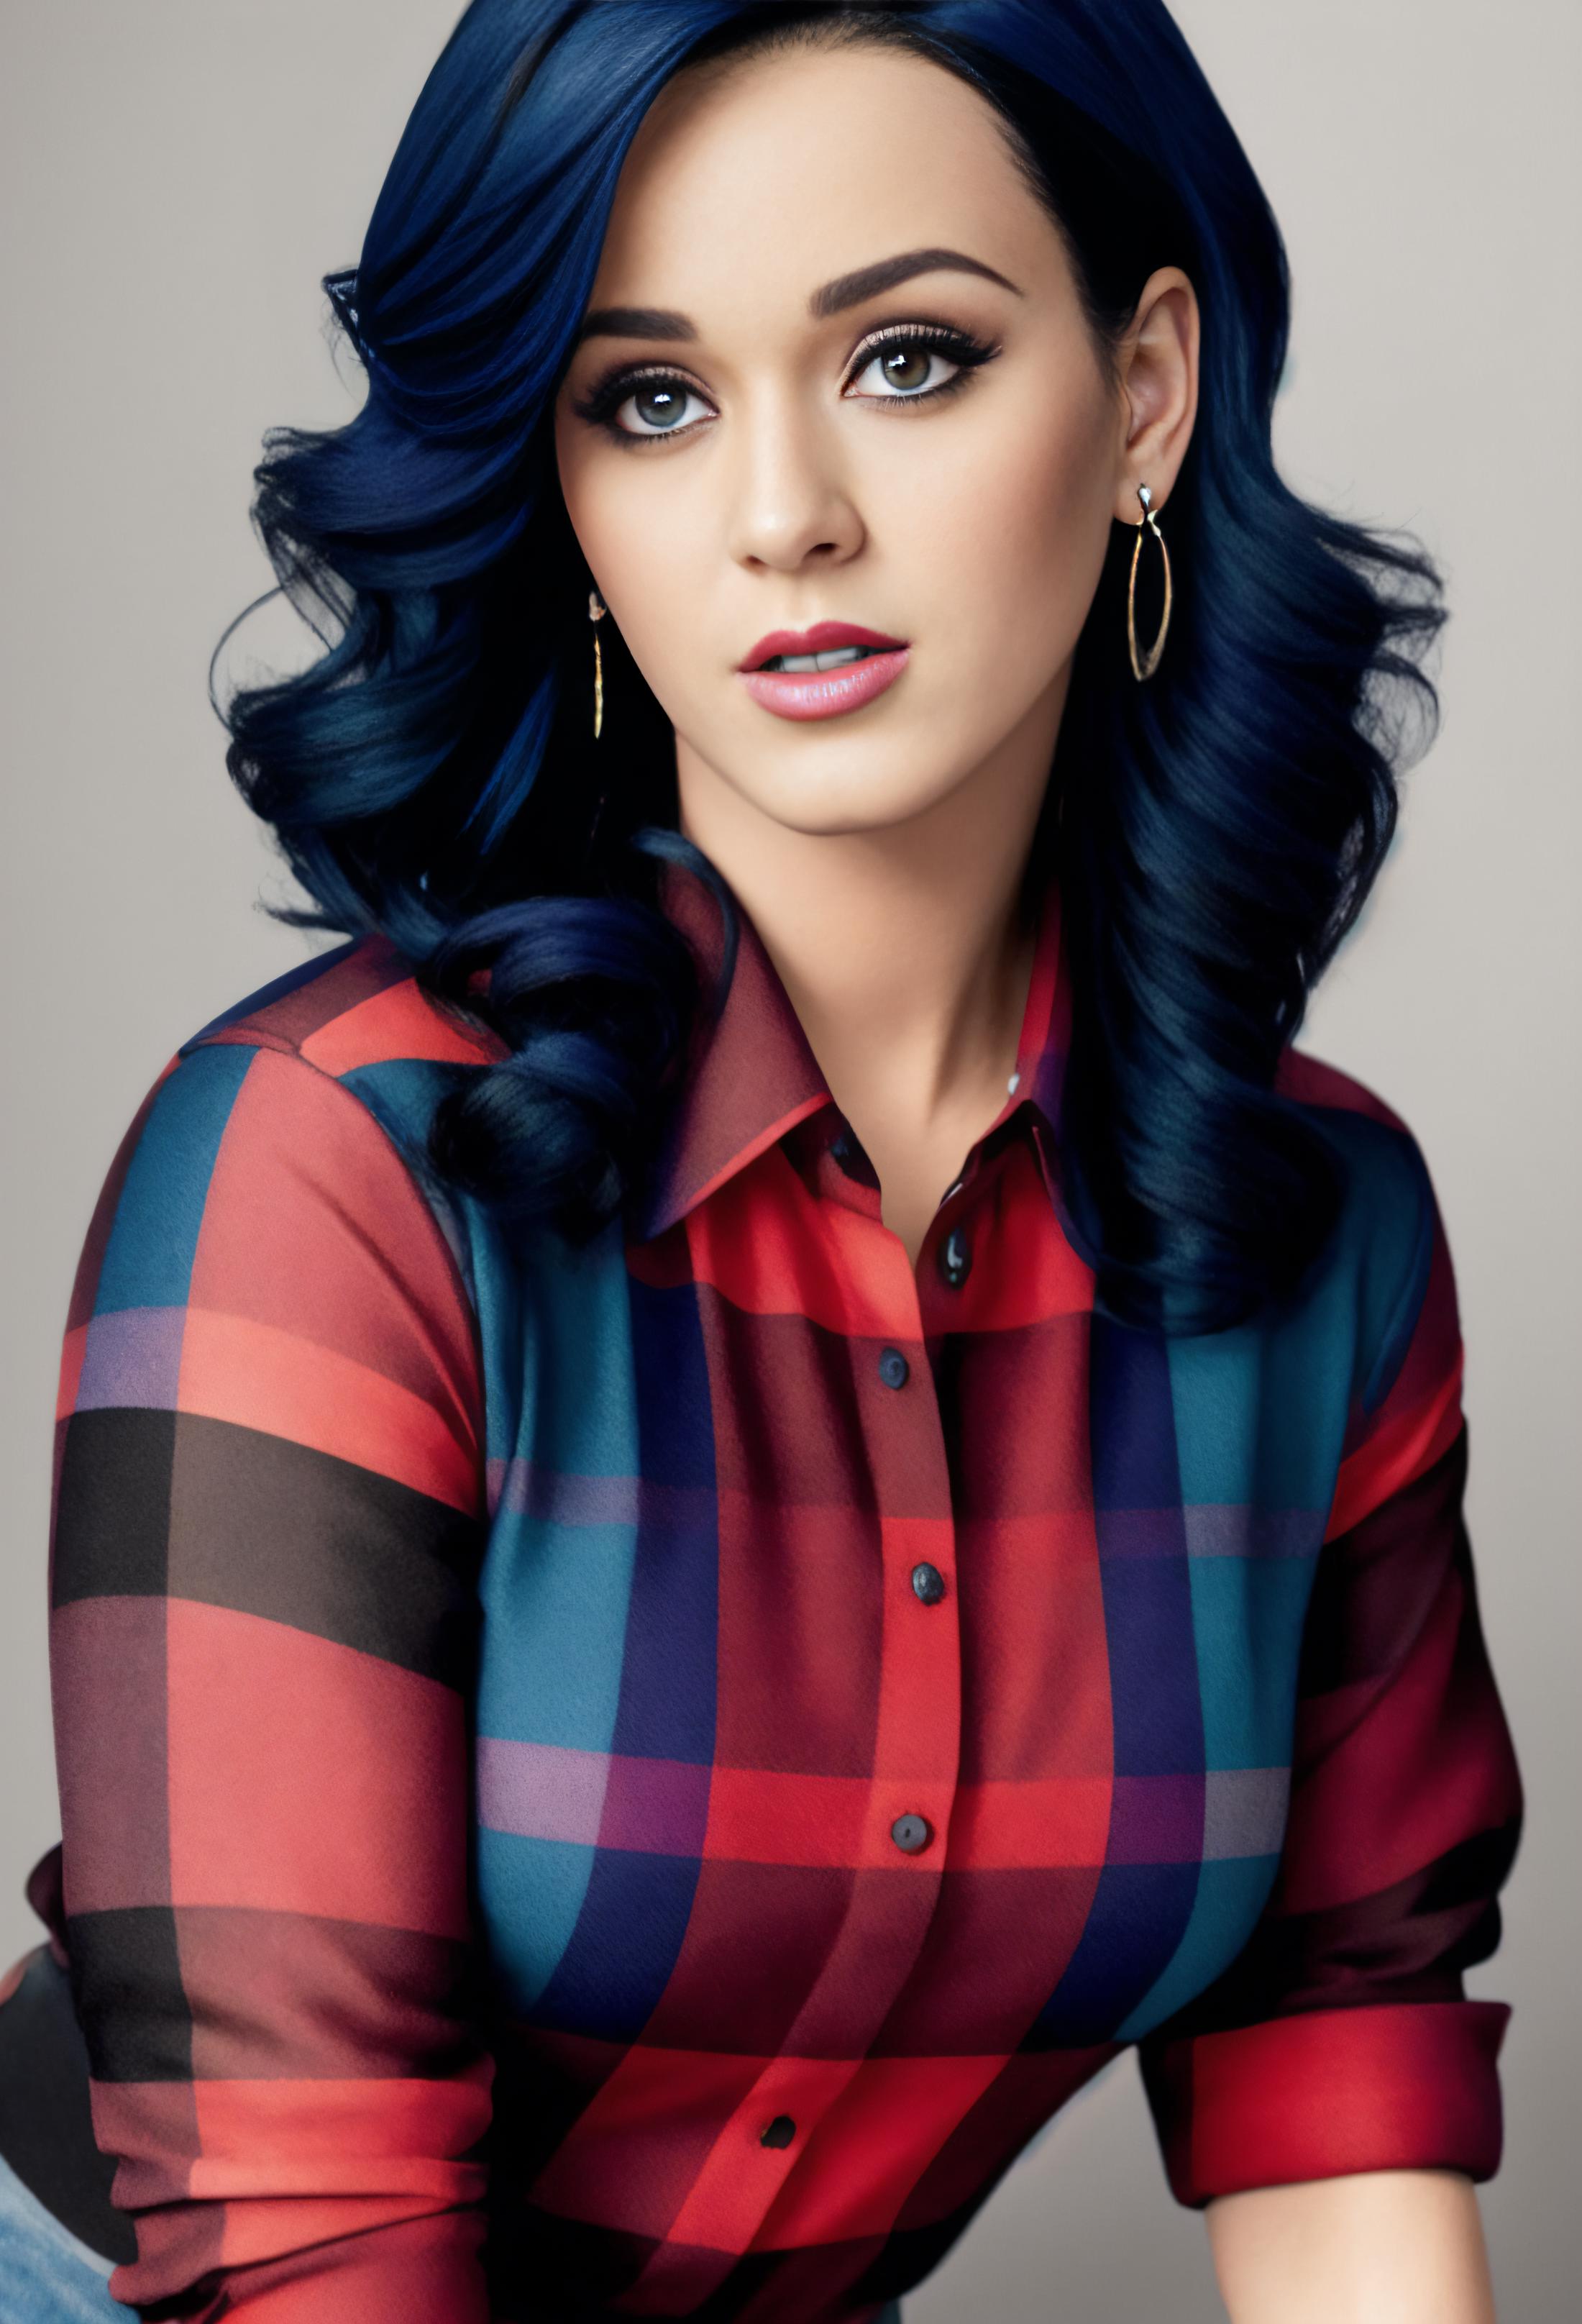 Katy Perry  image by frankyfrank2k